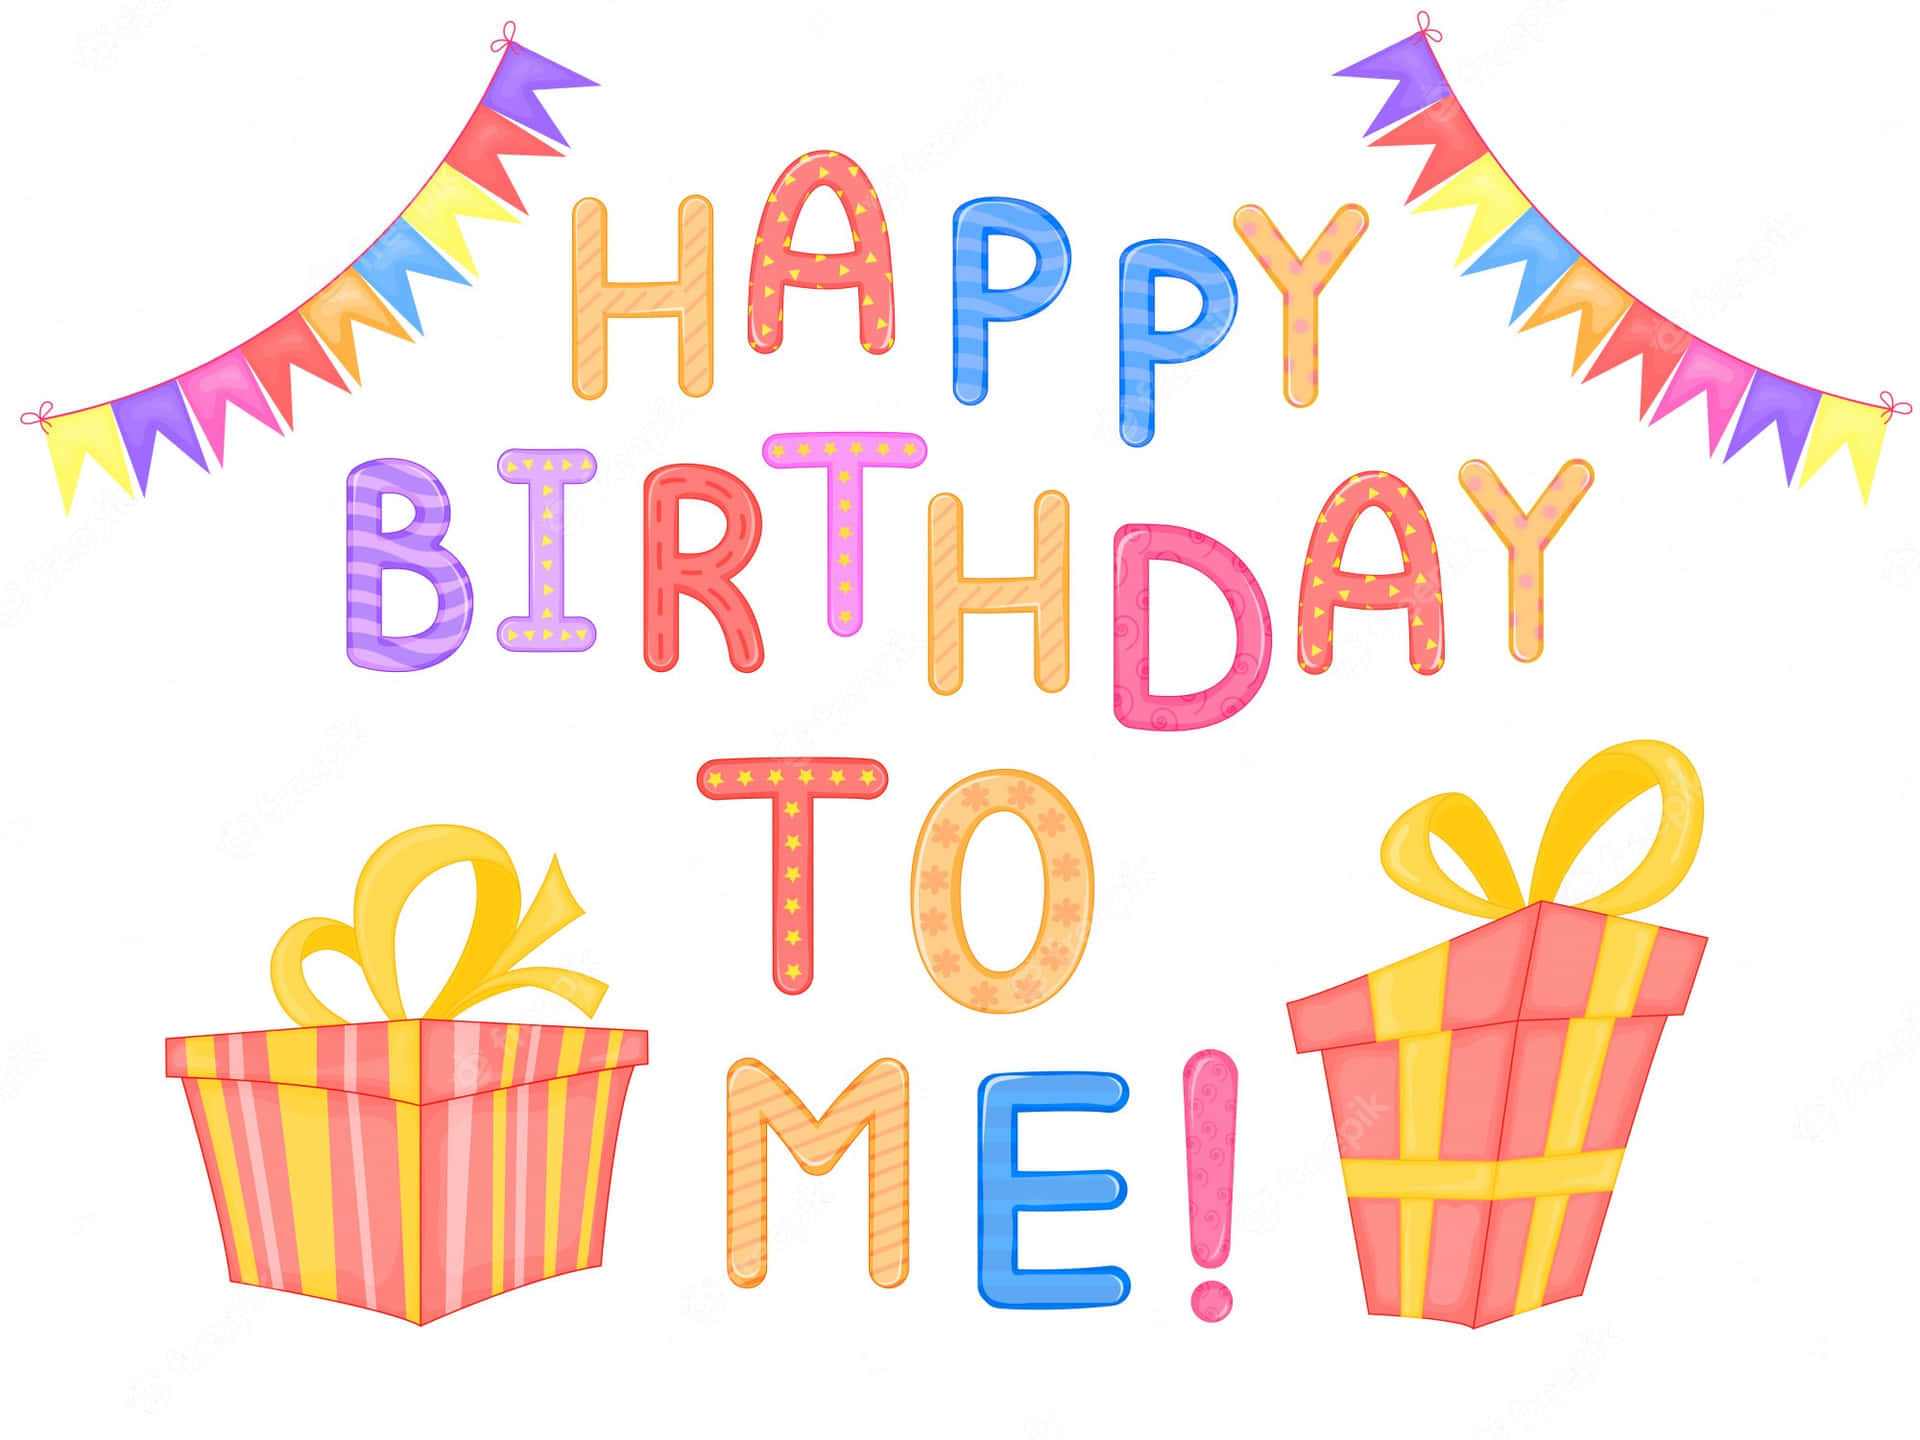 Celebrate My Birthday in Style